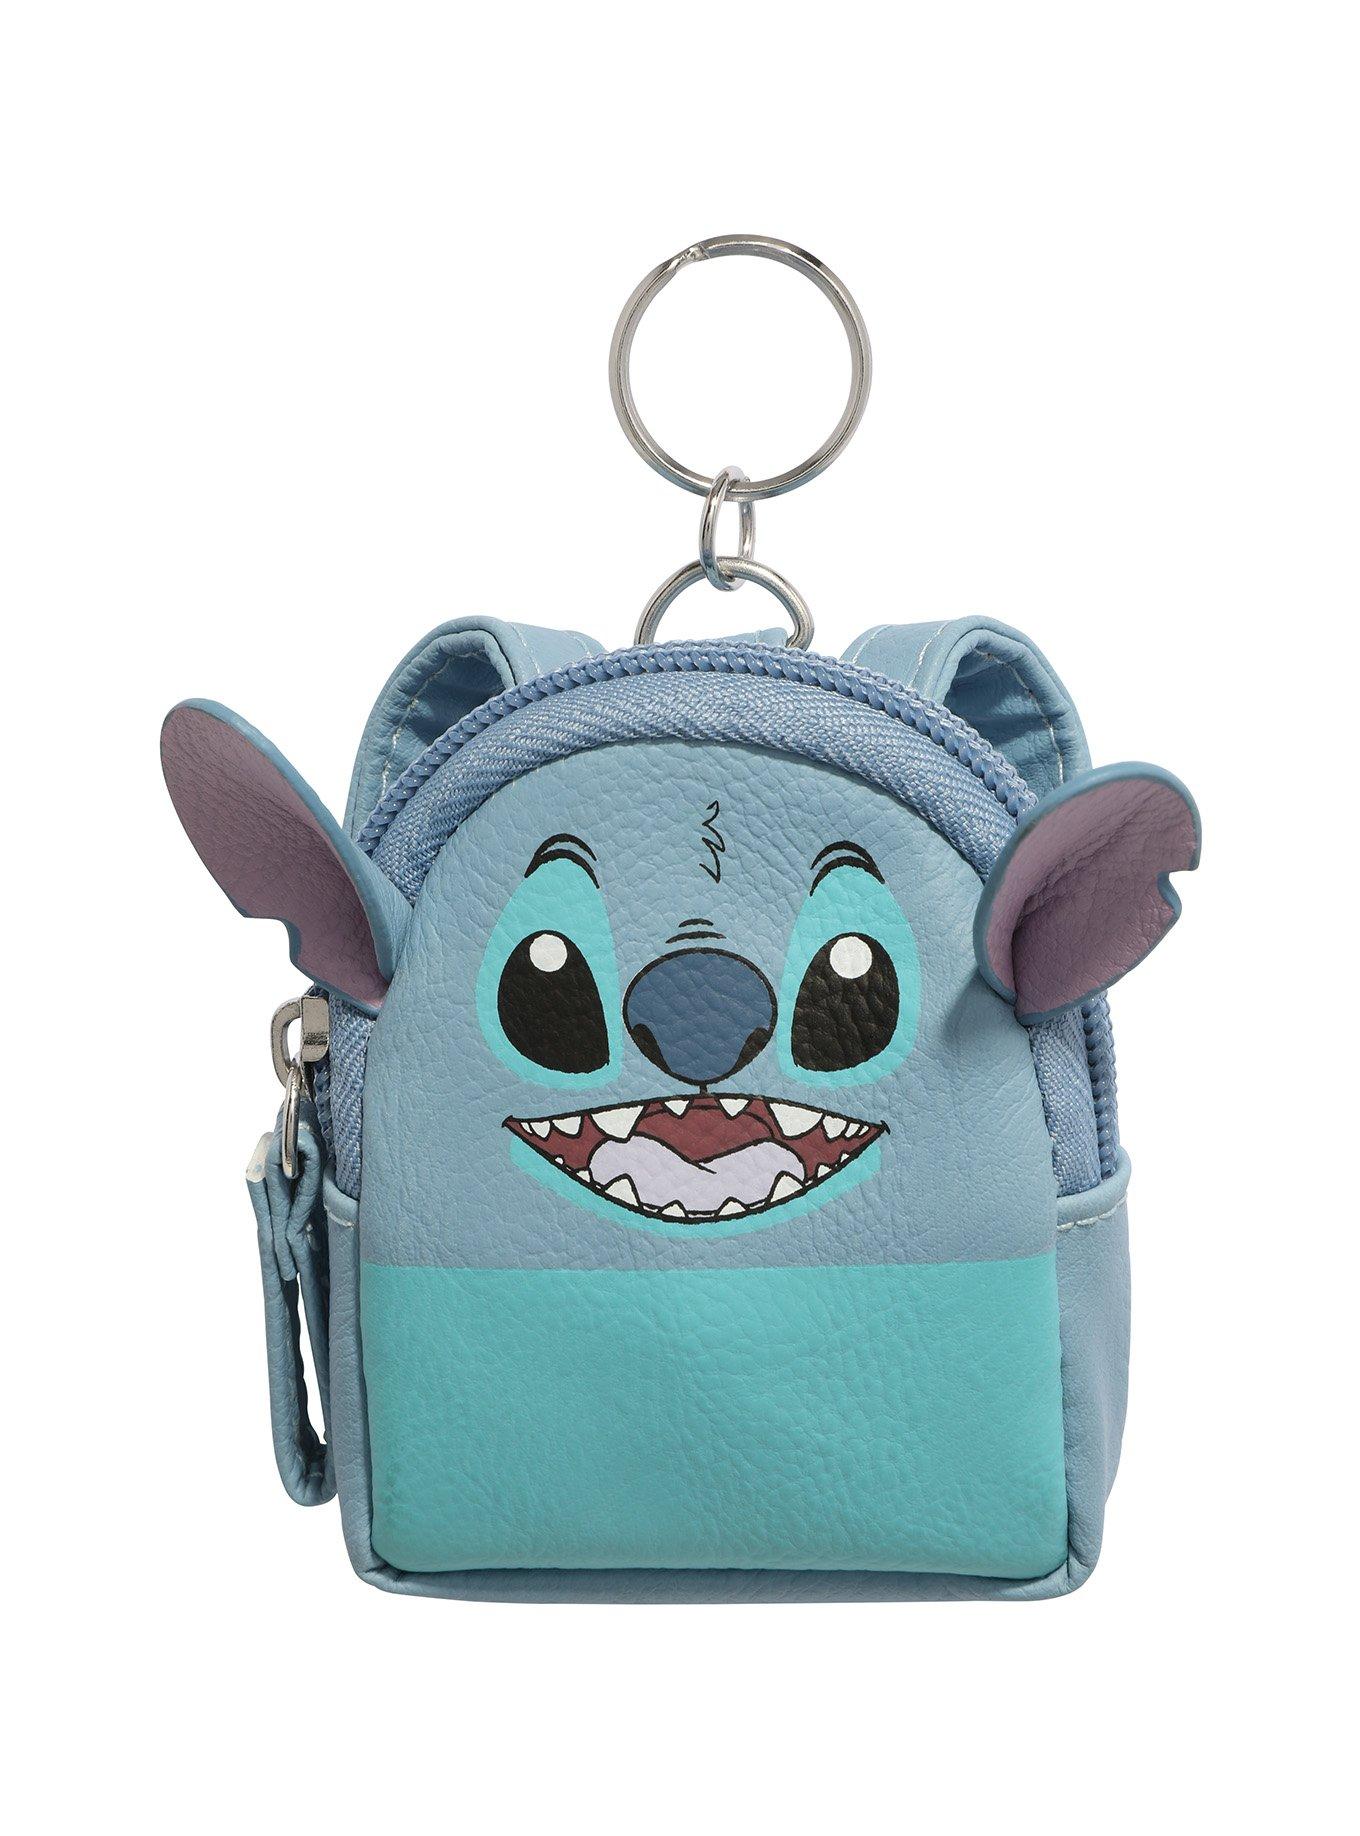 Disney Lilo & Stitch Character Mini Backpack Key Chain